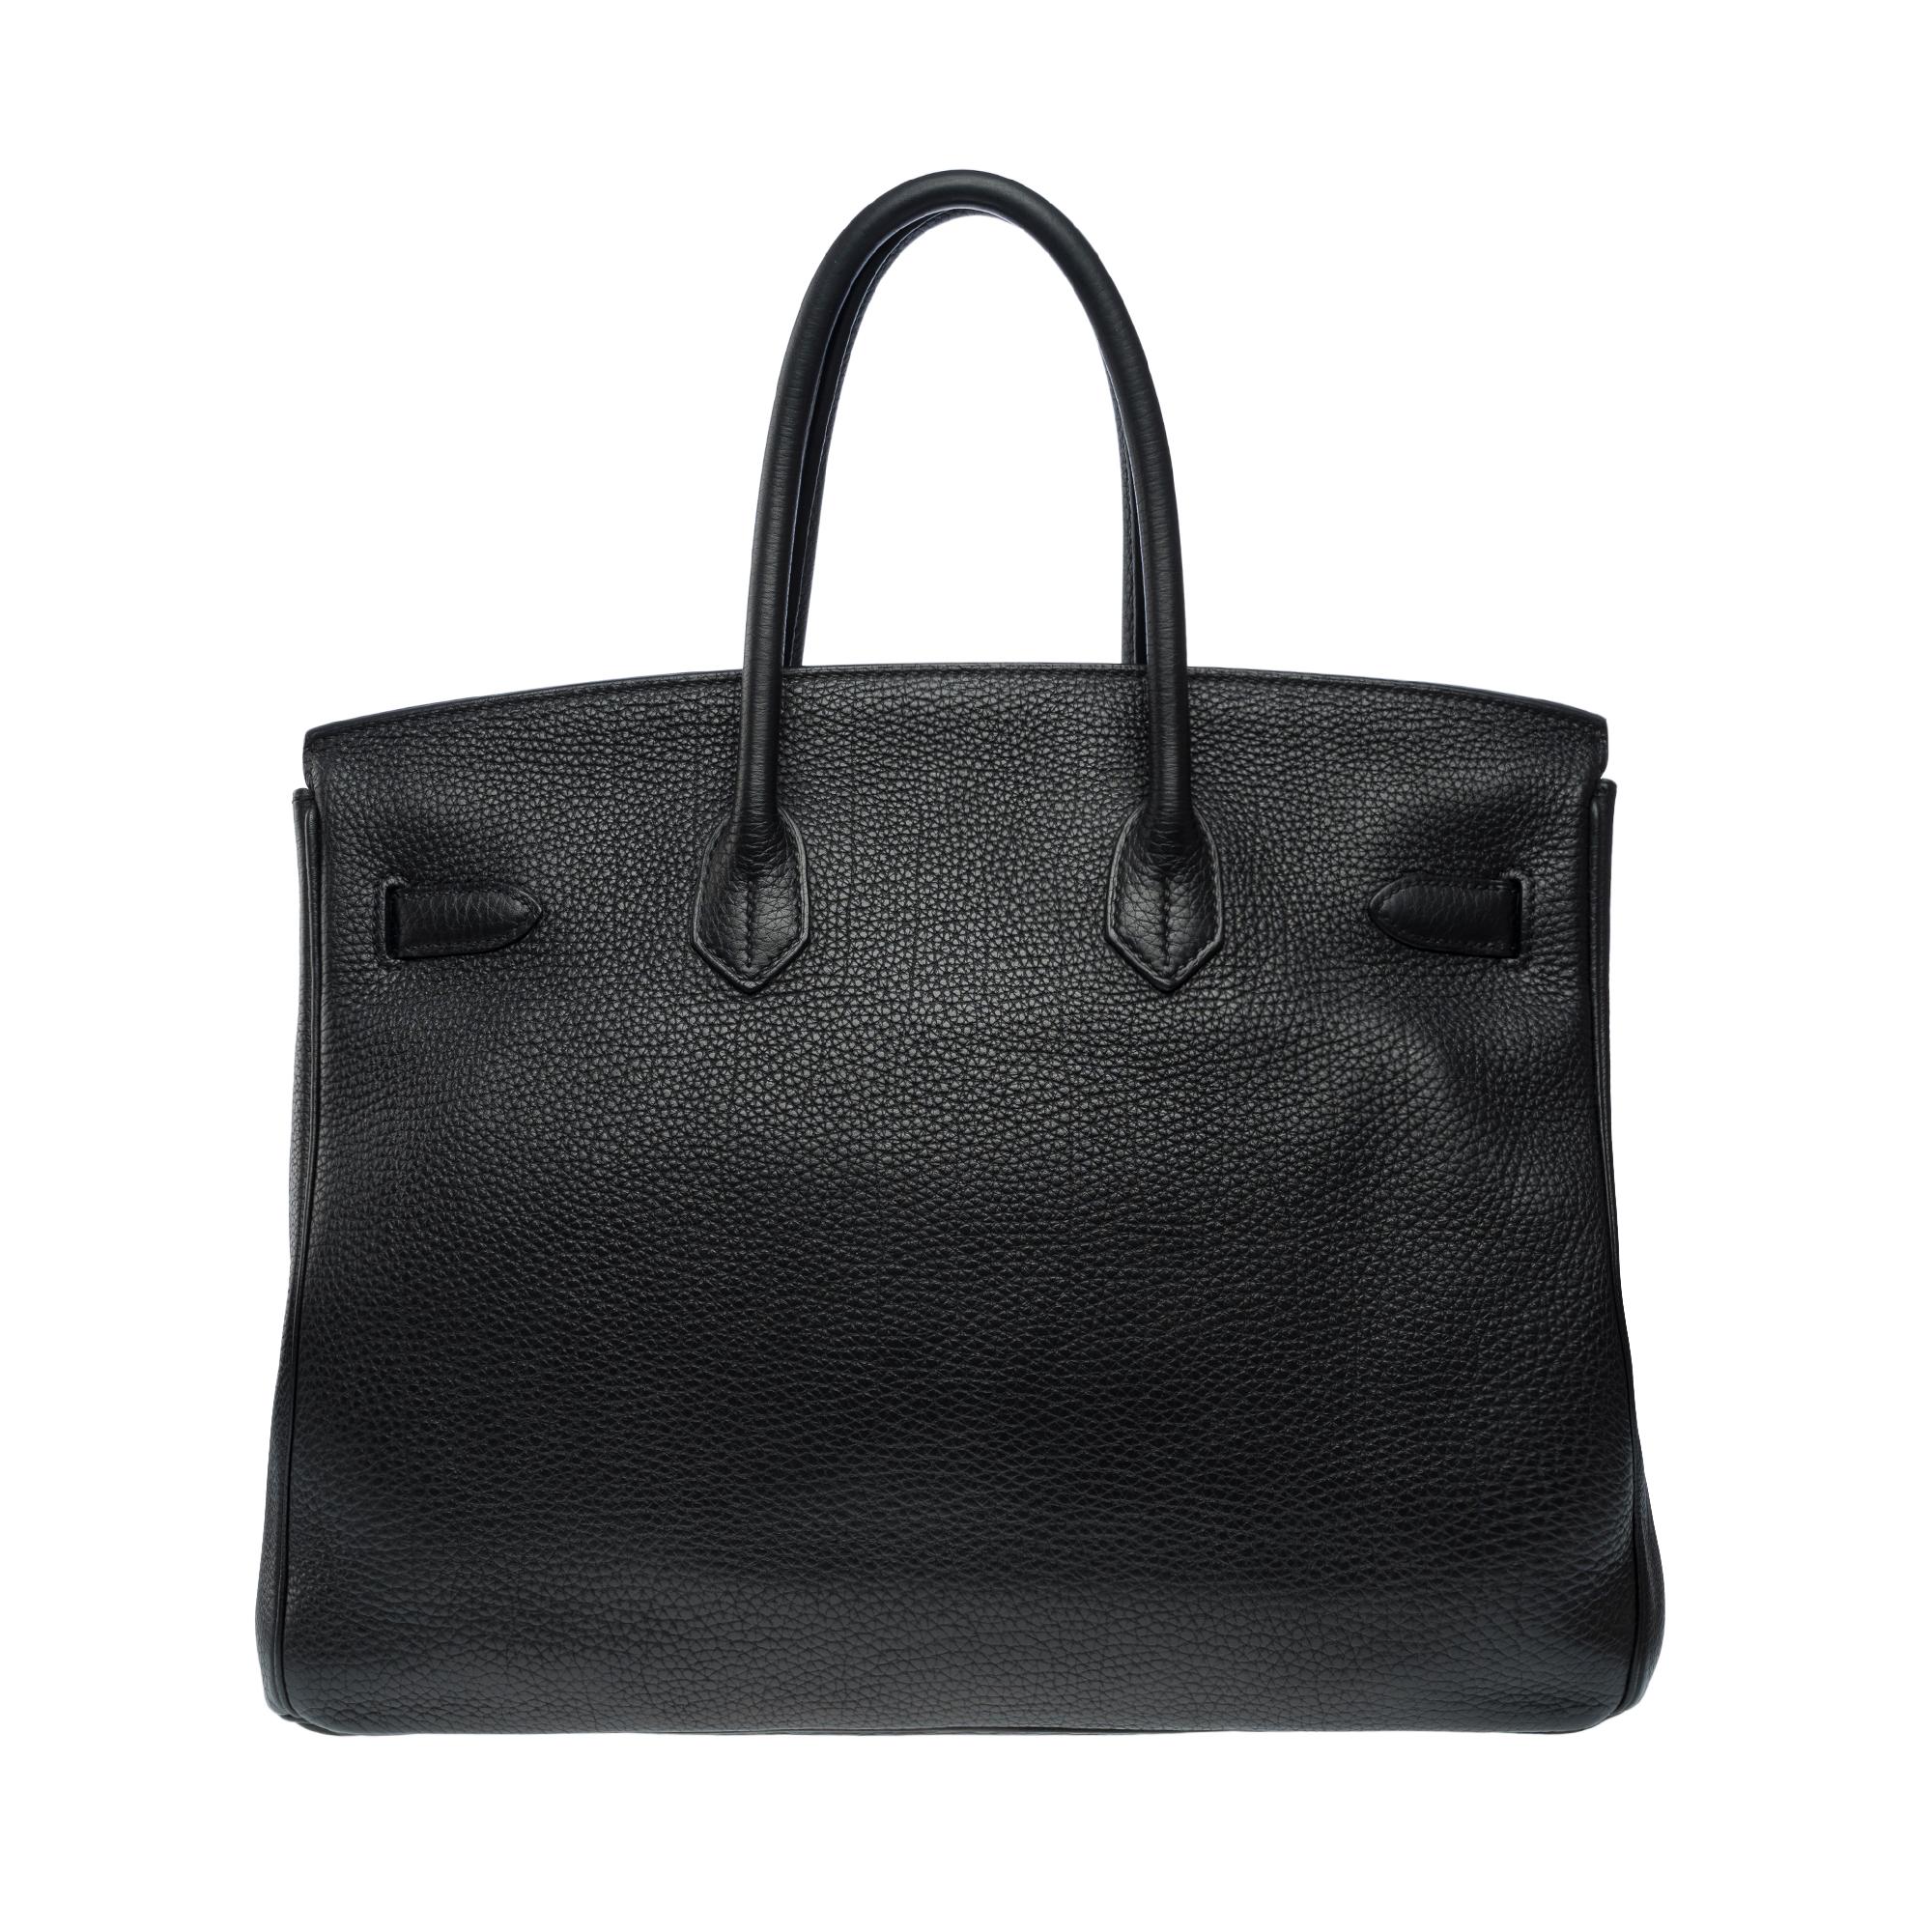 Women's Stunning Hermes Birkin 30 handbag in Black Togo leather, SHW For Sale